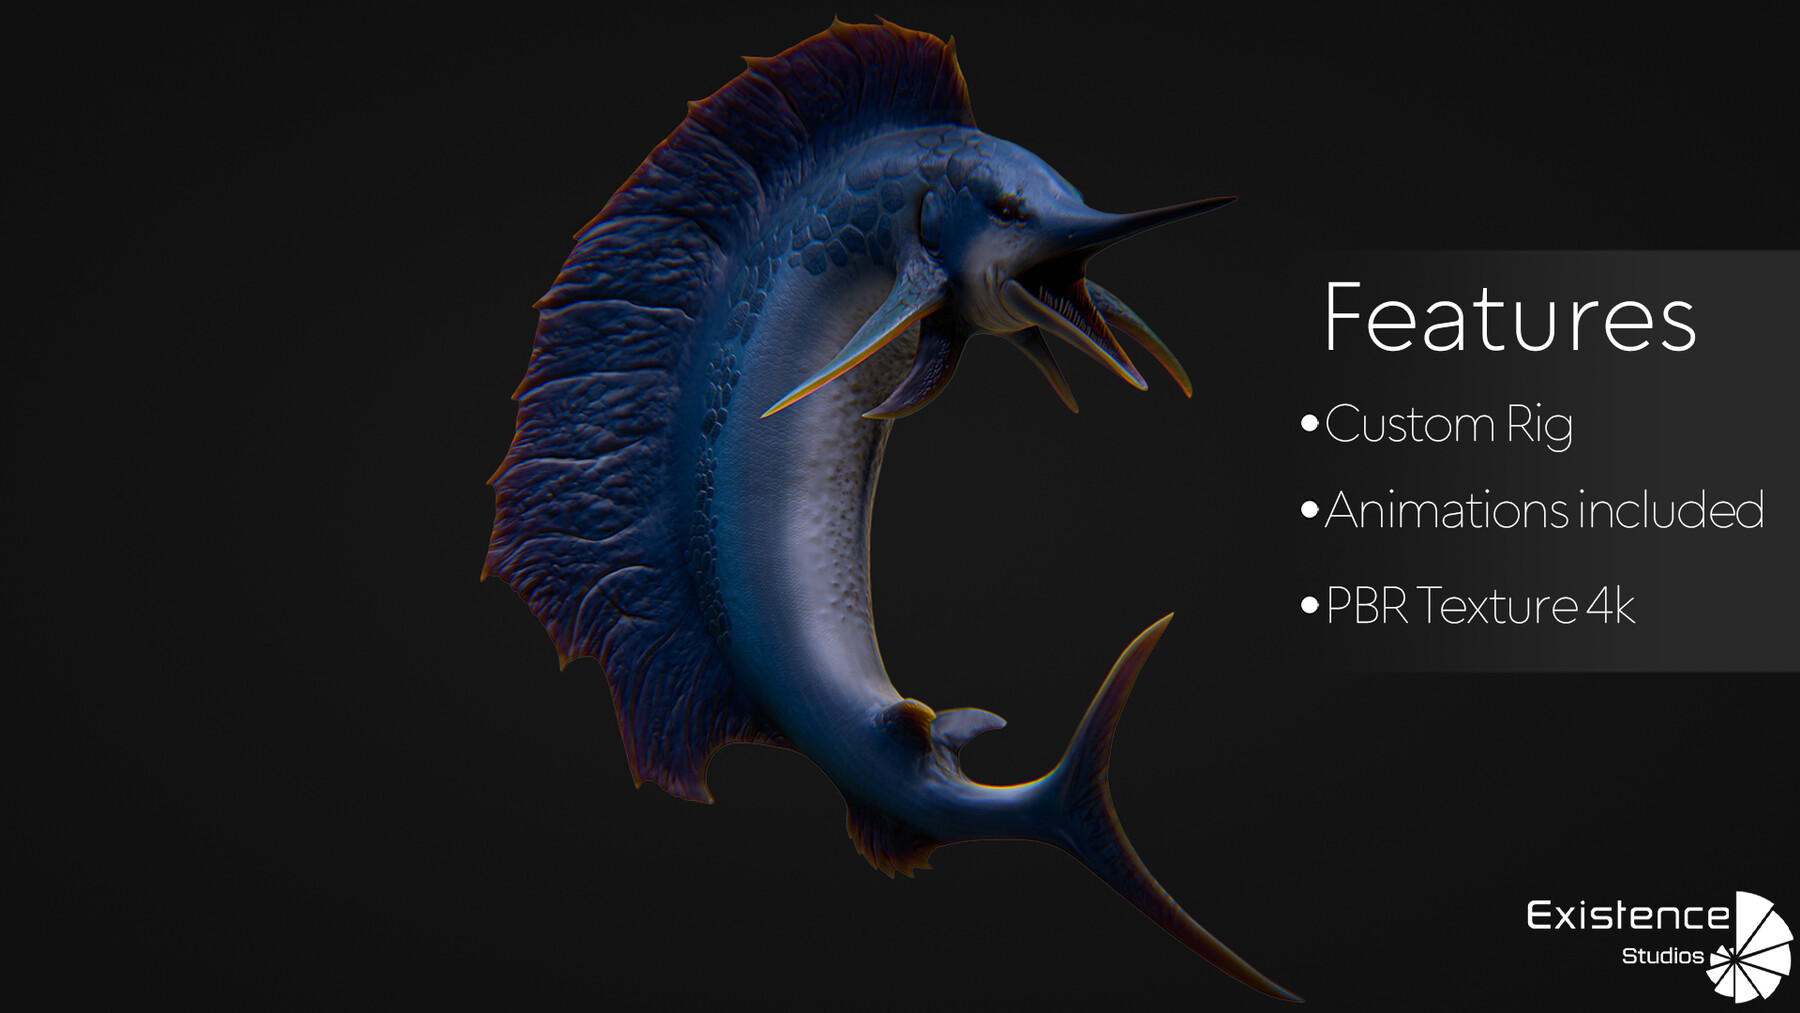 Ocean Monster Fish 02 Pack / Fish low poly model / lowpoly horror fish 3D  #11, 3D Creatures